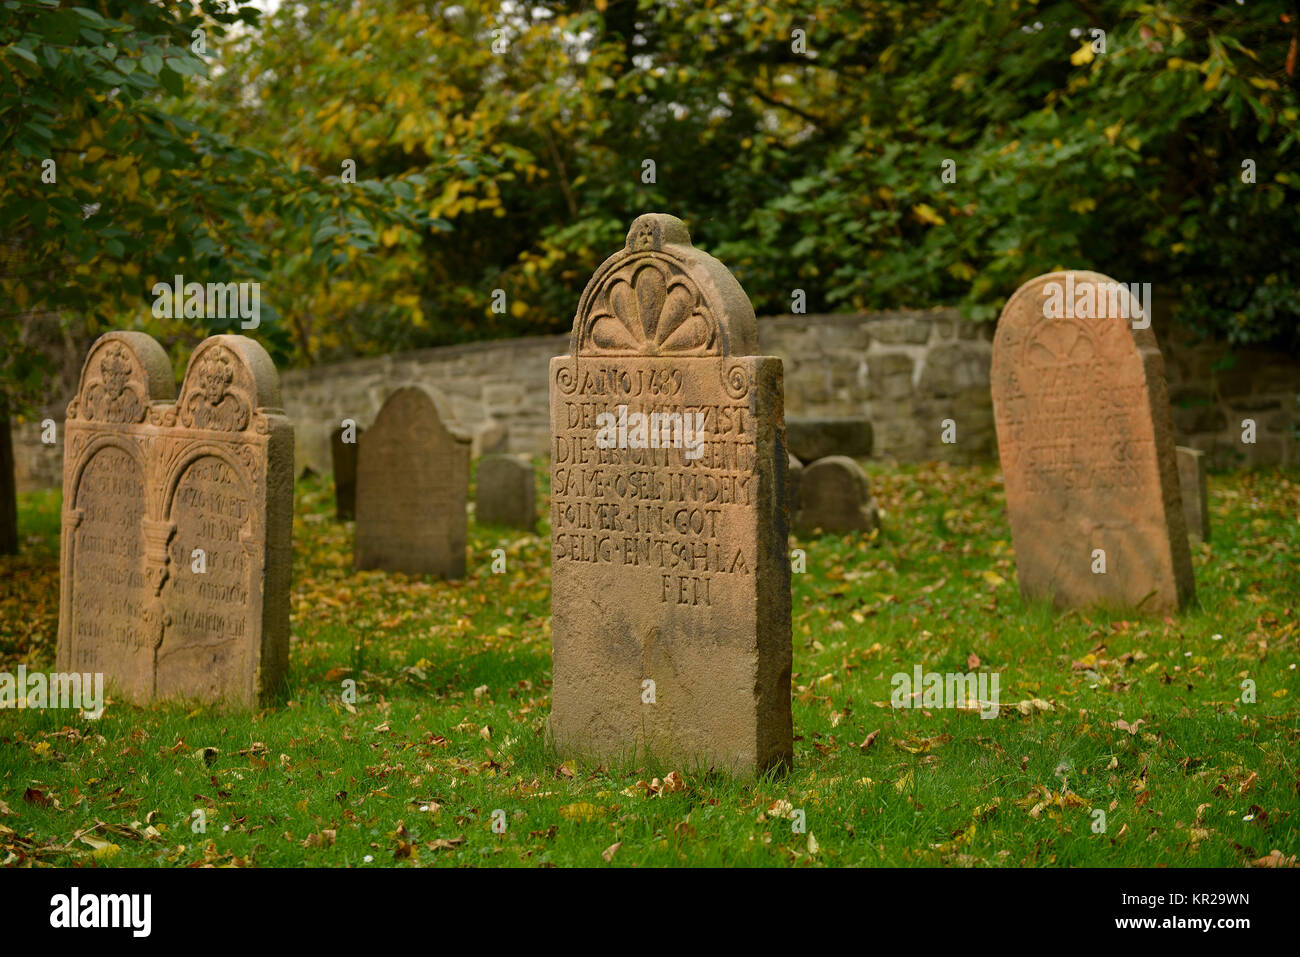 Gravestones, cemetery Dorfkirche Stiepel, Brockhauser street, Stiepel, Bochum, North Rhine-Westphalia, Germany, Grabsteine, Friedhof Dorfkirche Stiepe Stock Photo